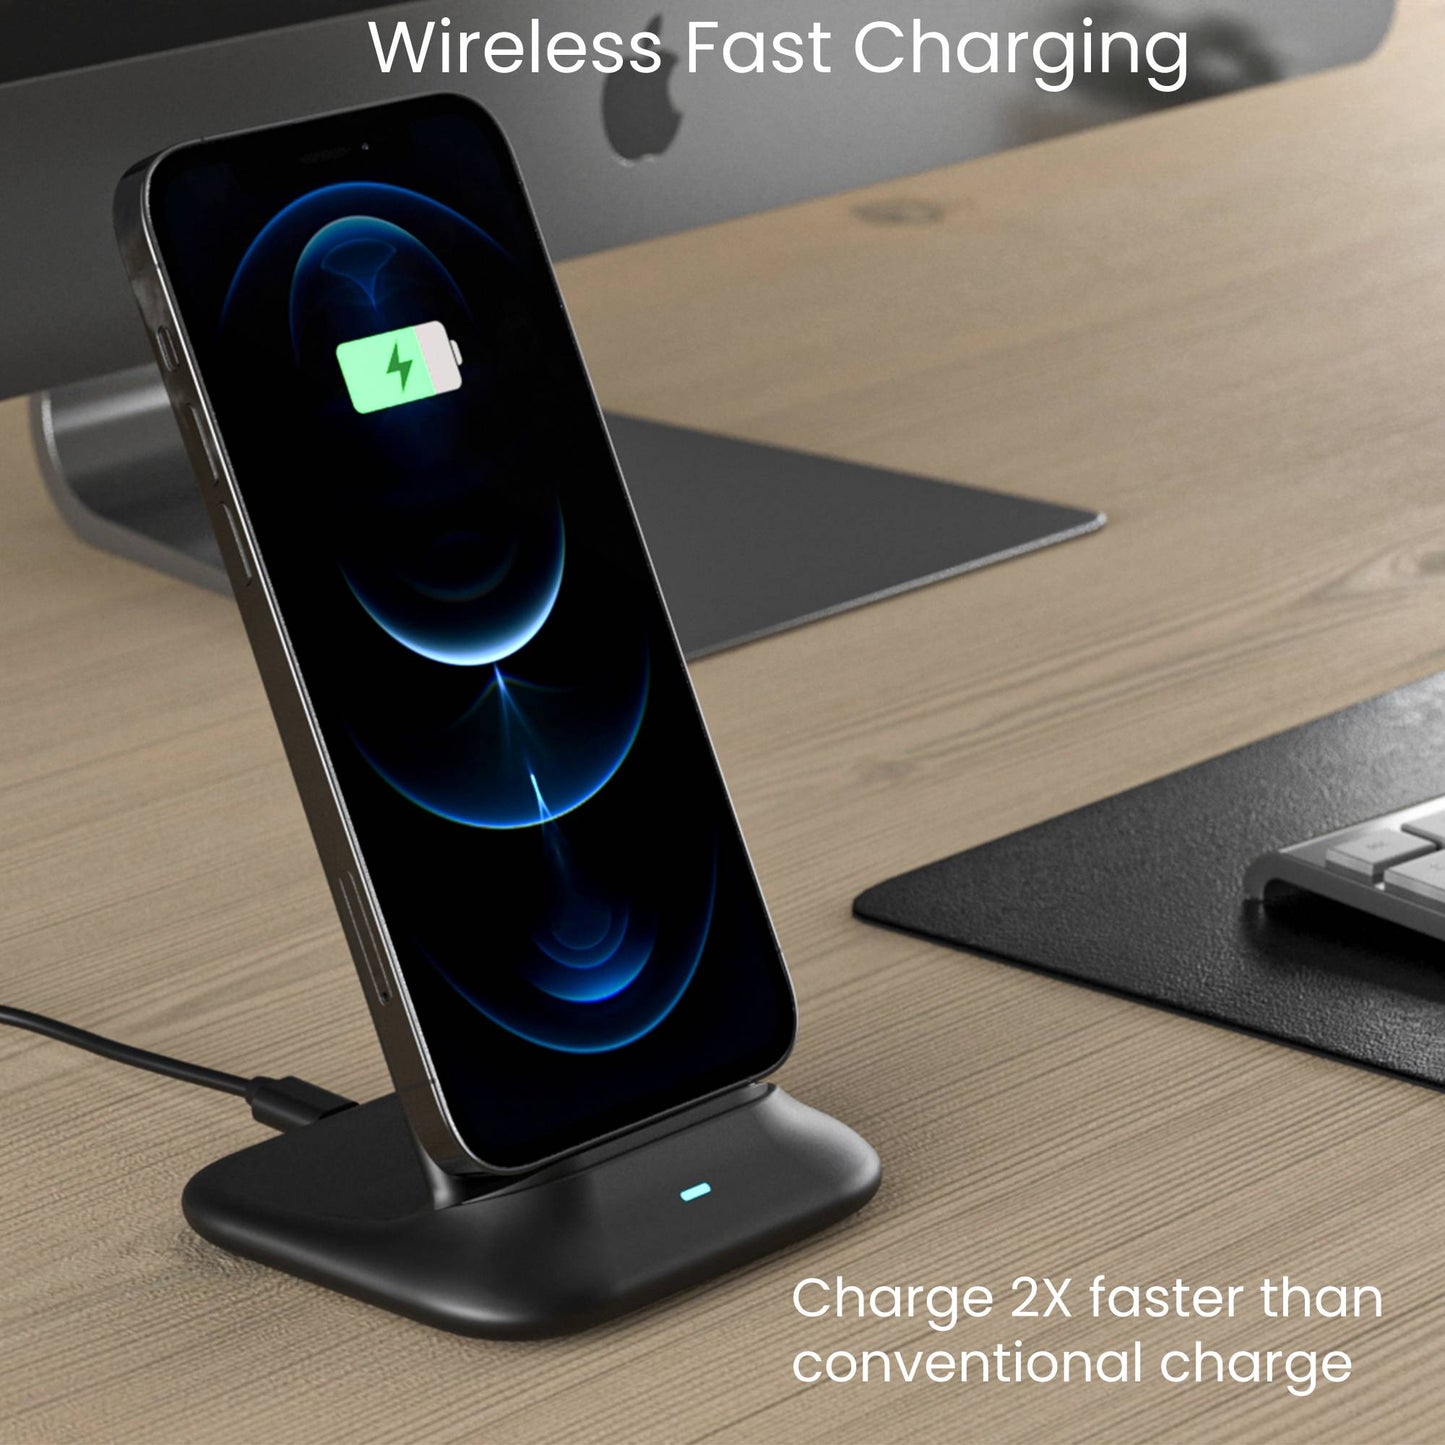 TSWireless 10W Fast Charging Wireless Charger & Stand - TechsmarterTechsmarterCharging Stand